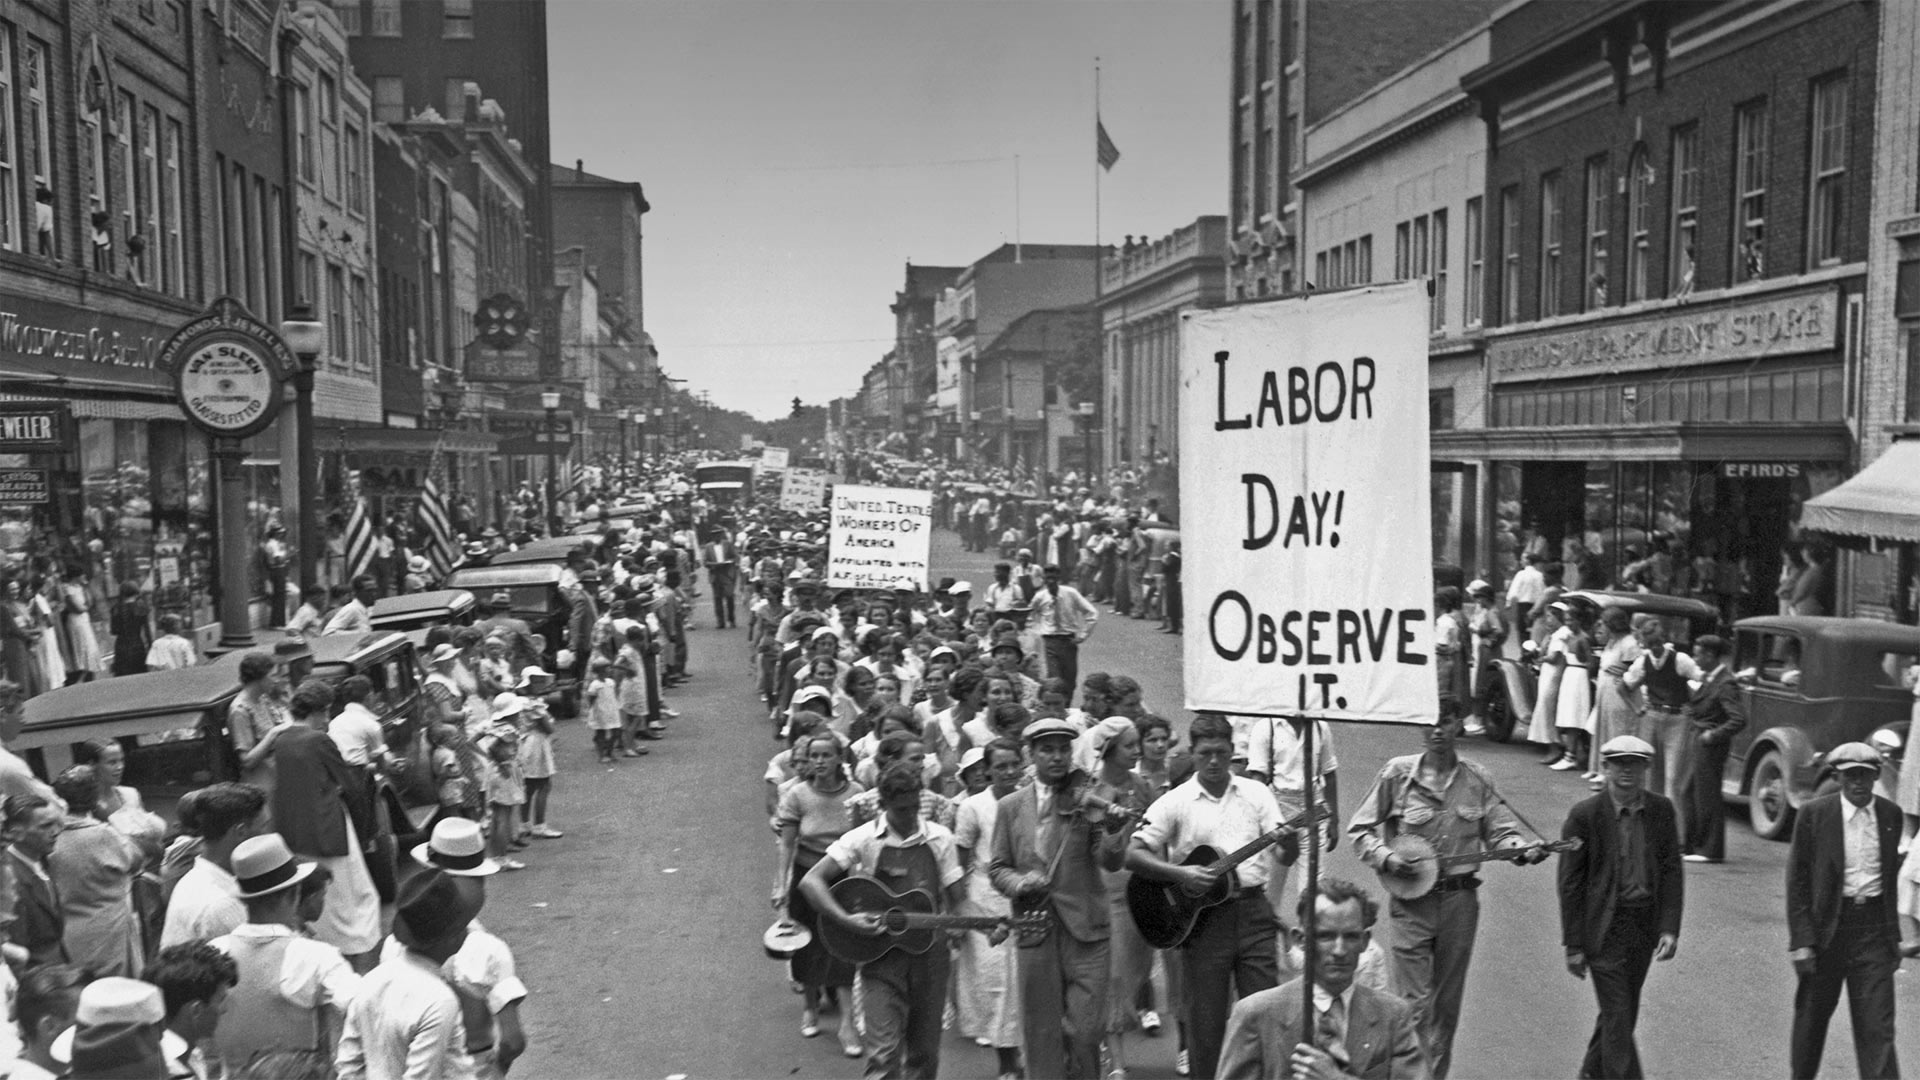 Labor Day parade in 1934, Gastonia, North Carolina - Bettmann/Getty Images)